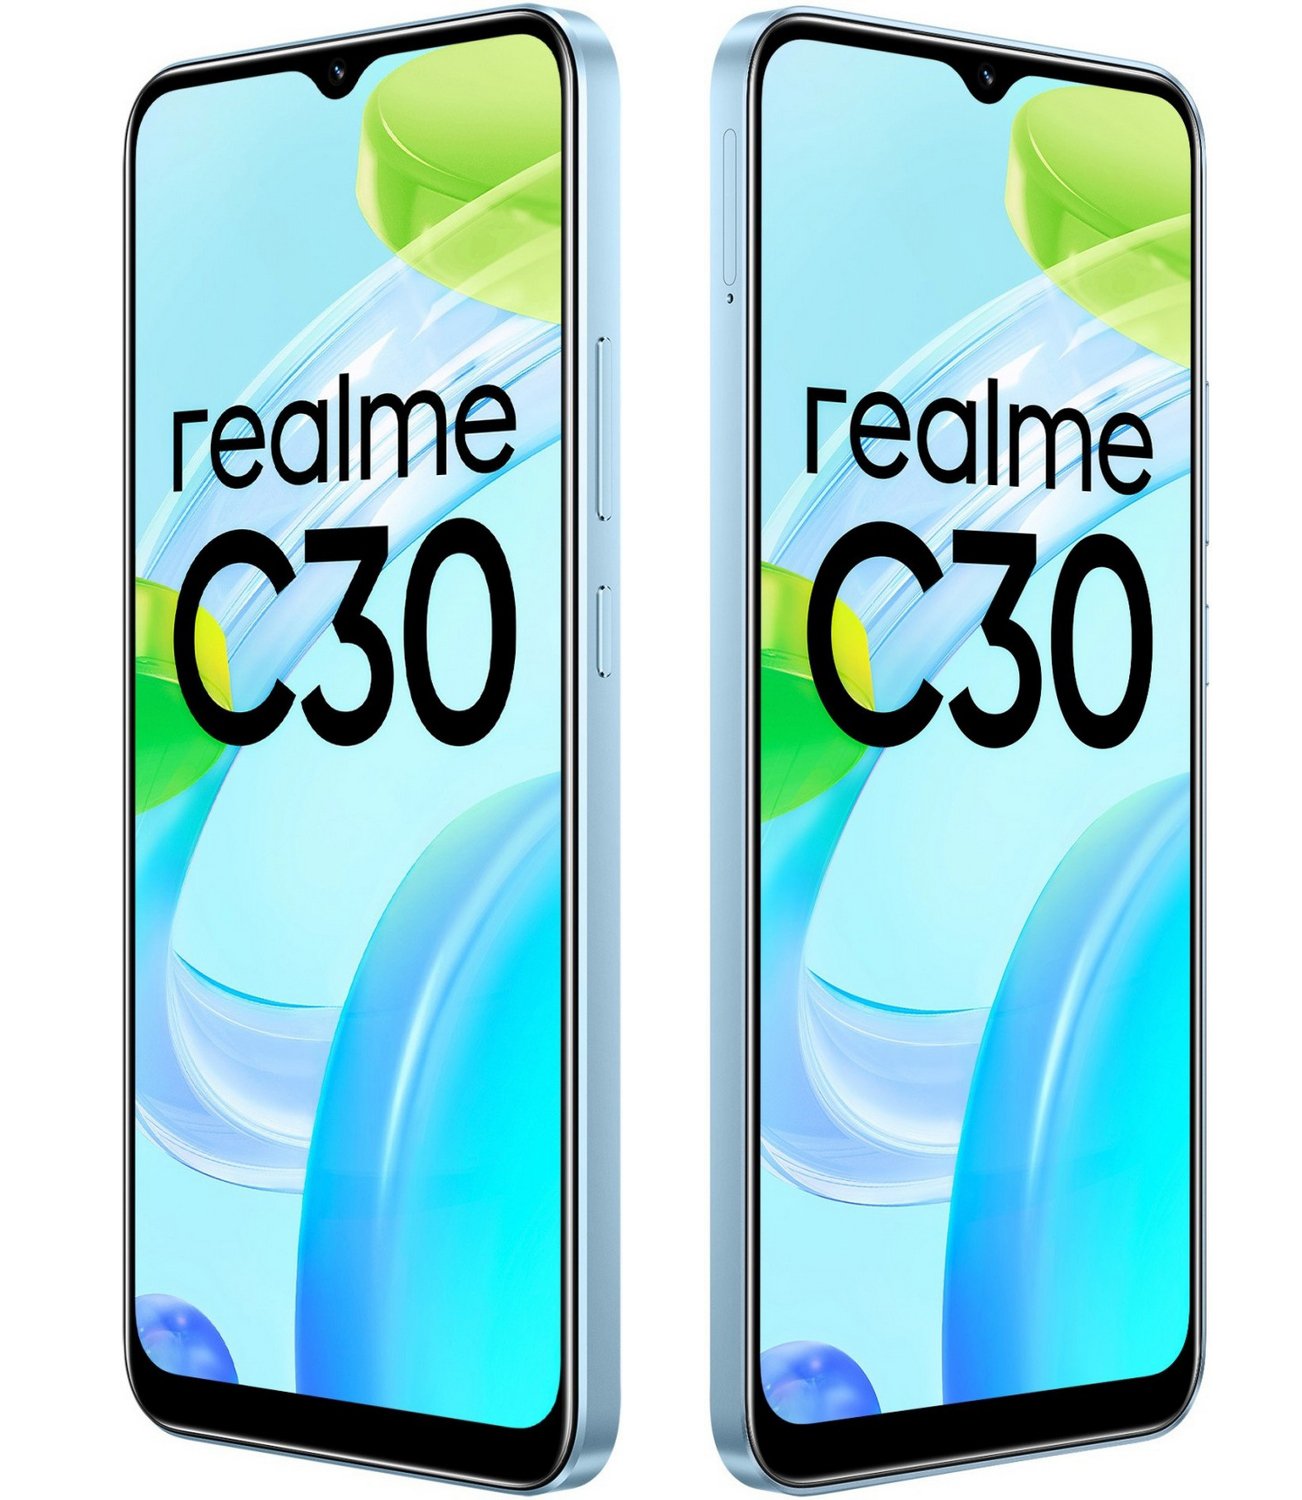 realme C30 64GB Зеленый